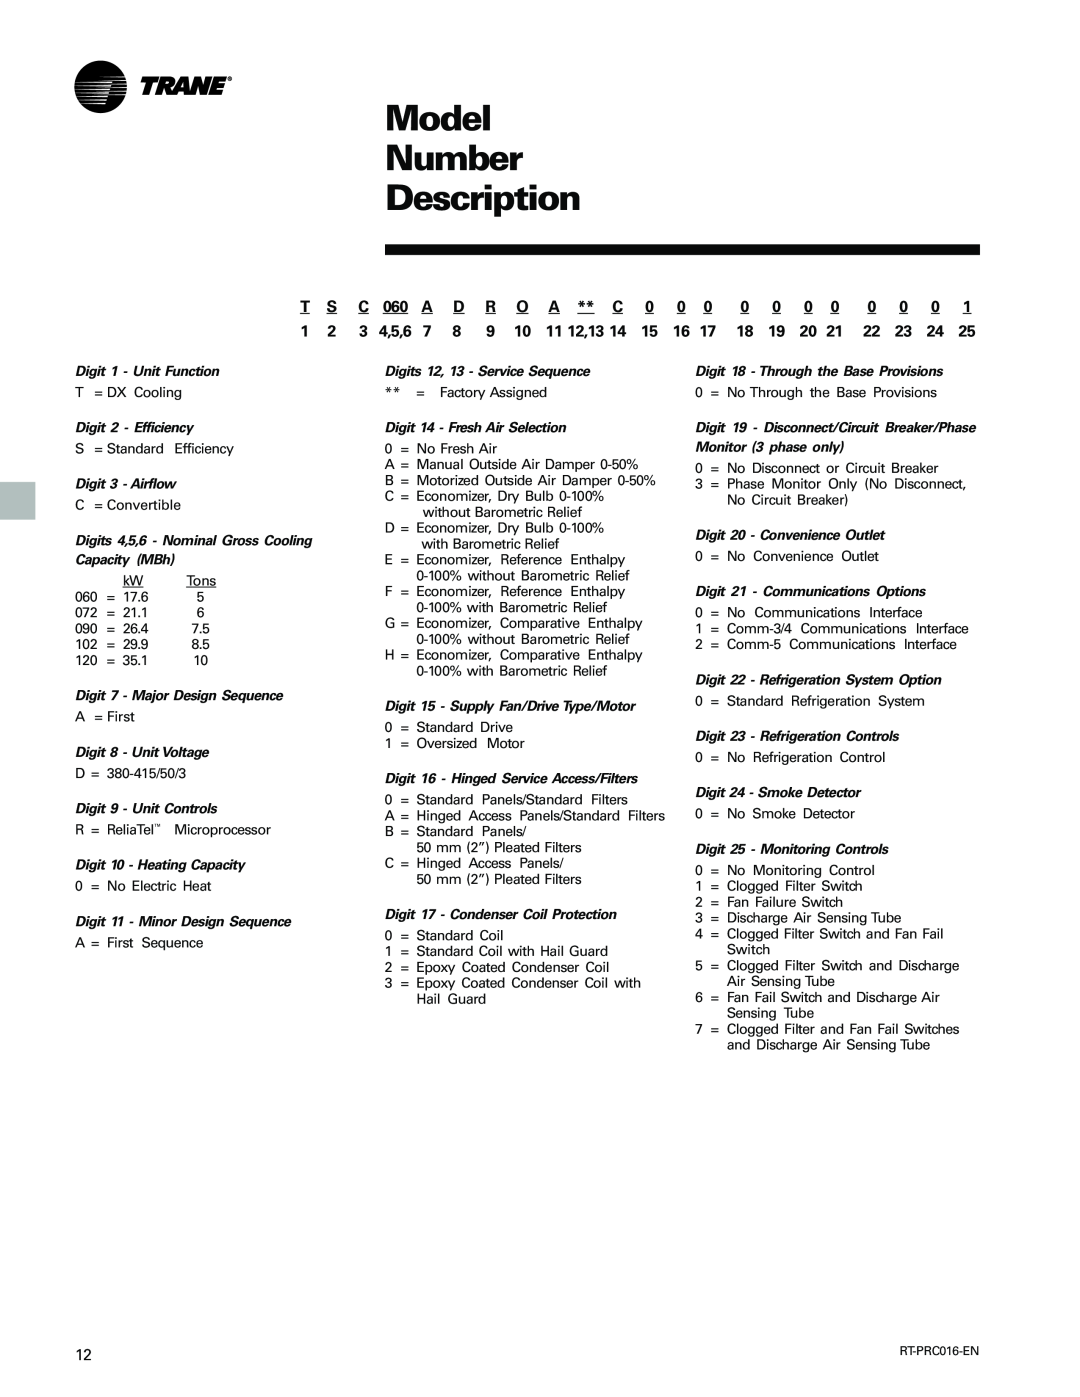 Trane TSC060-120 manual Model Number Description 